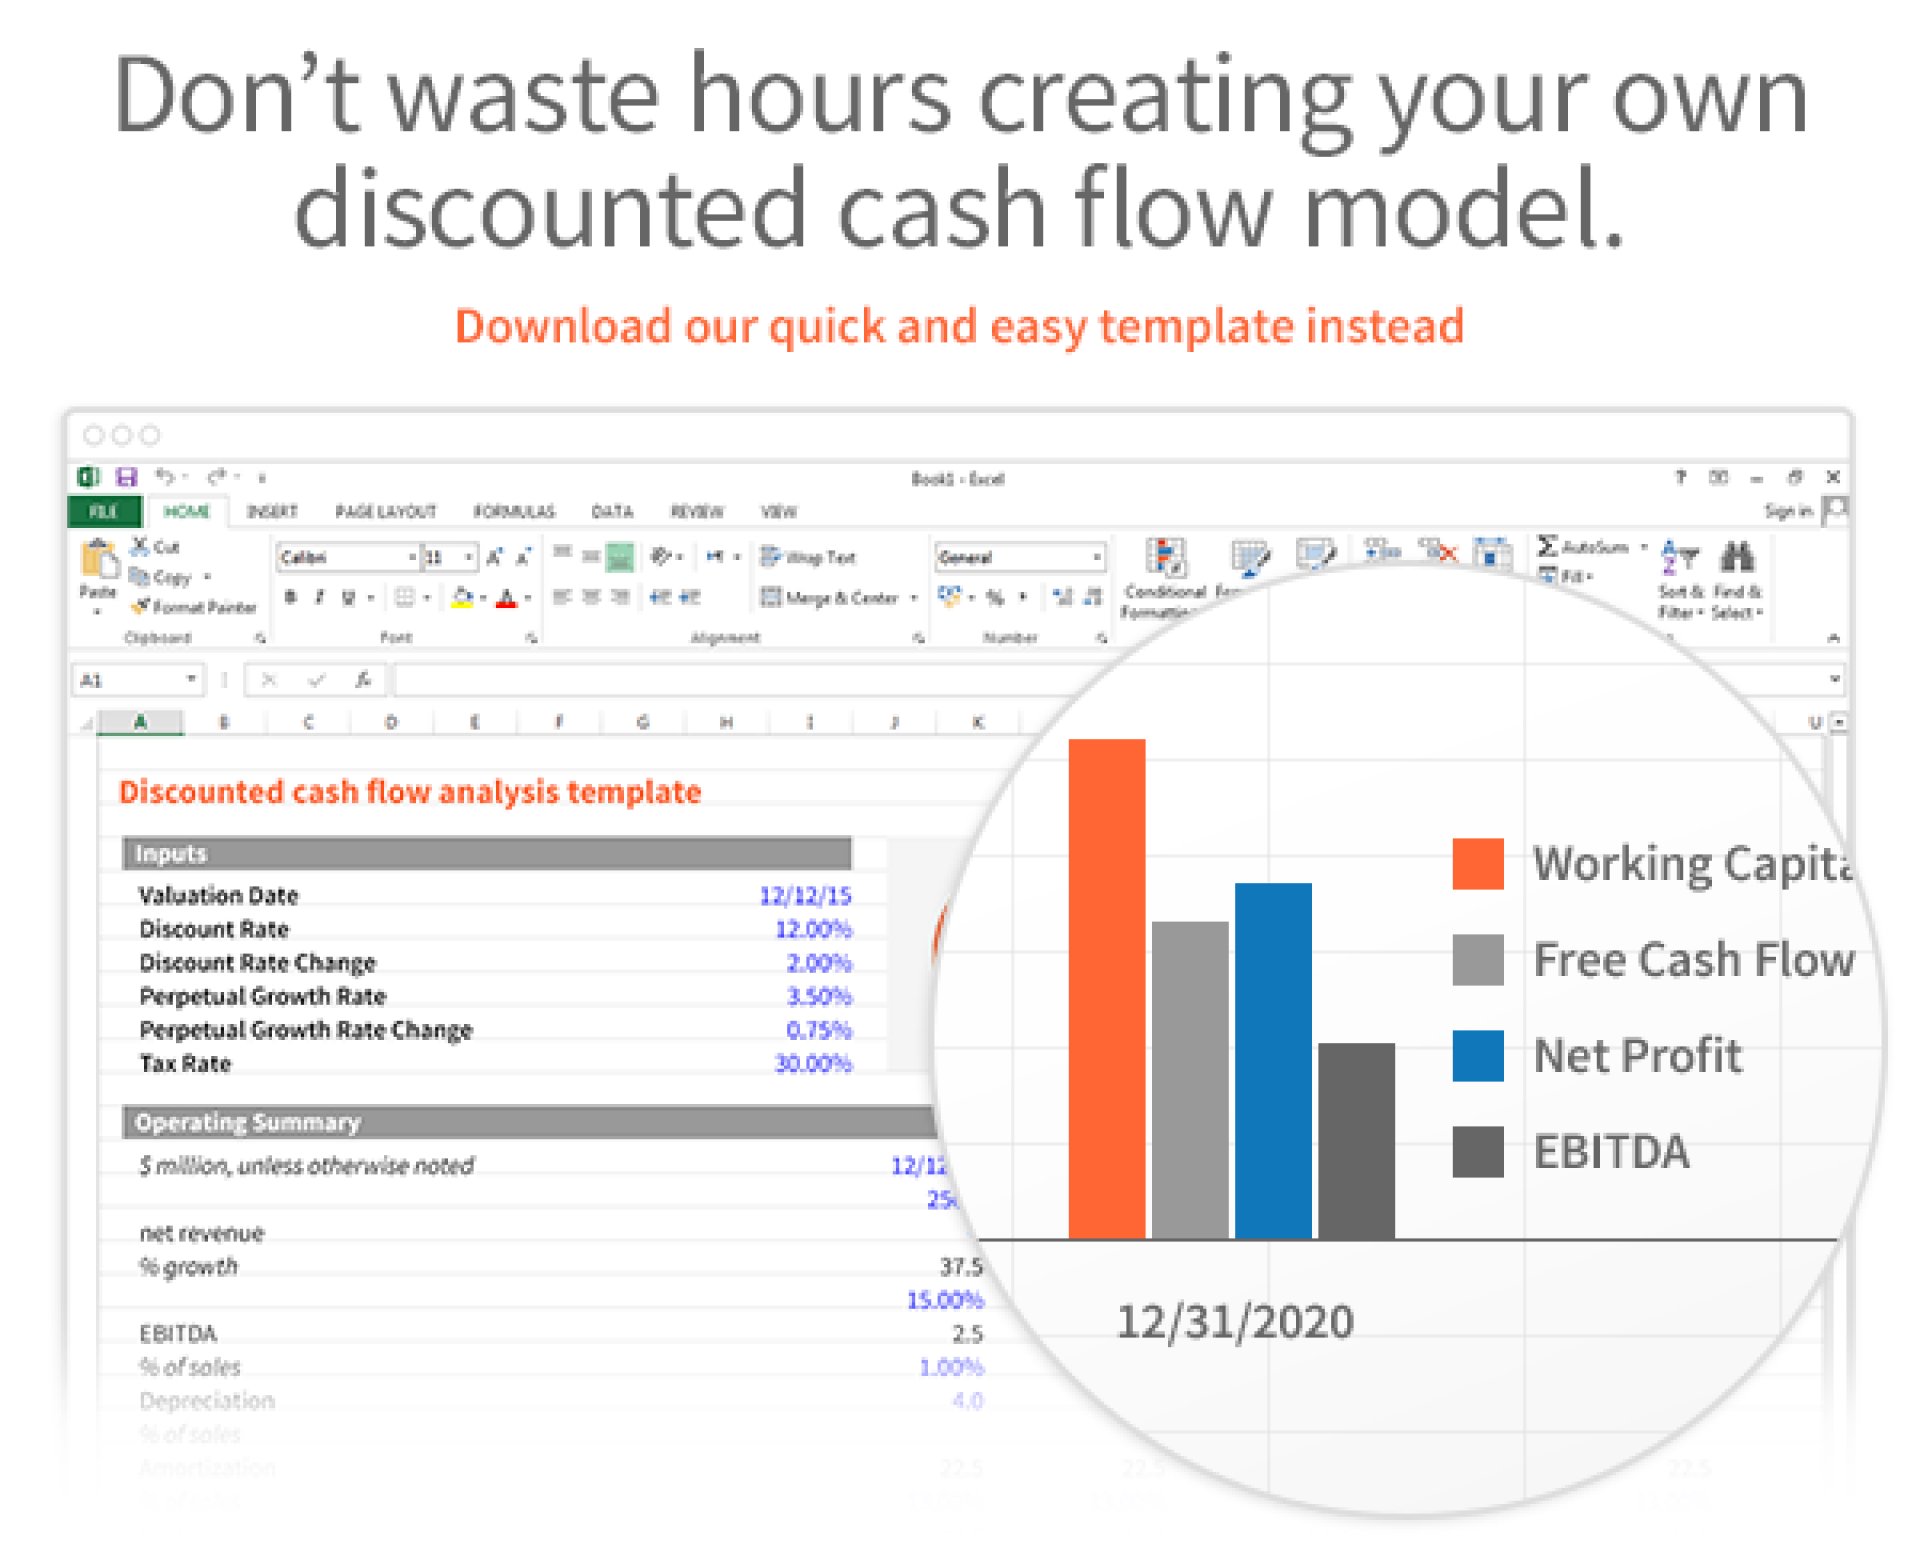 dcf-discounted-cash-flow-model-excel-template-eloquens